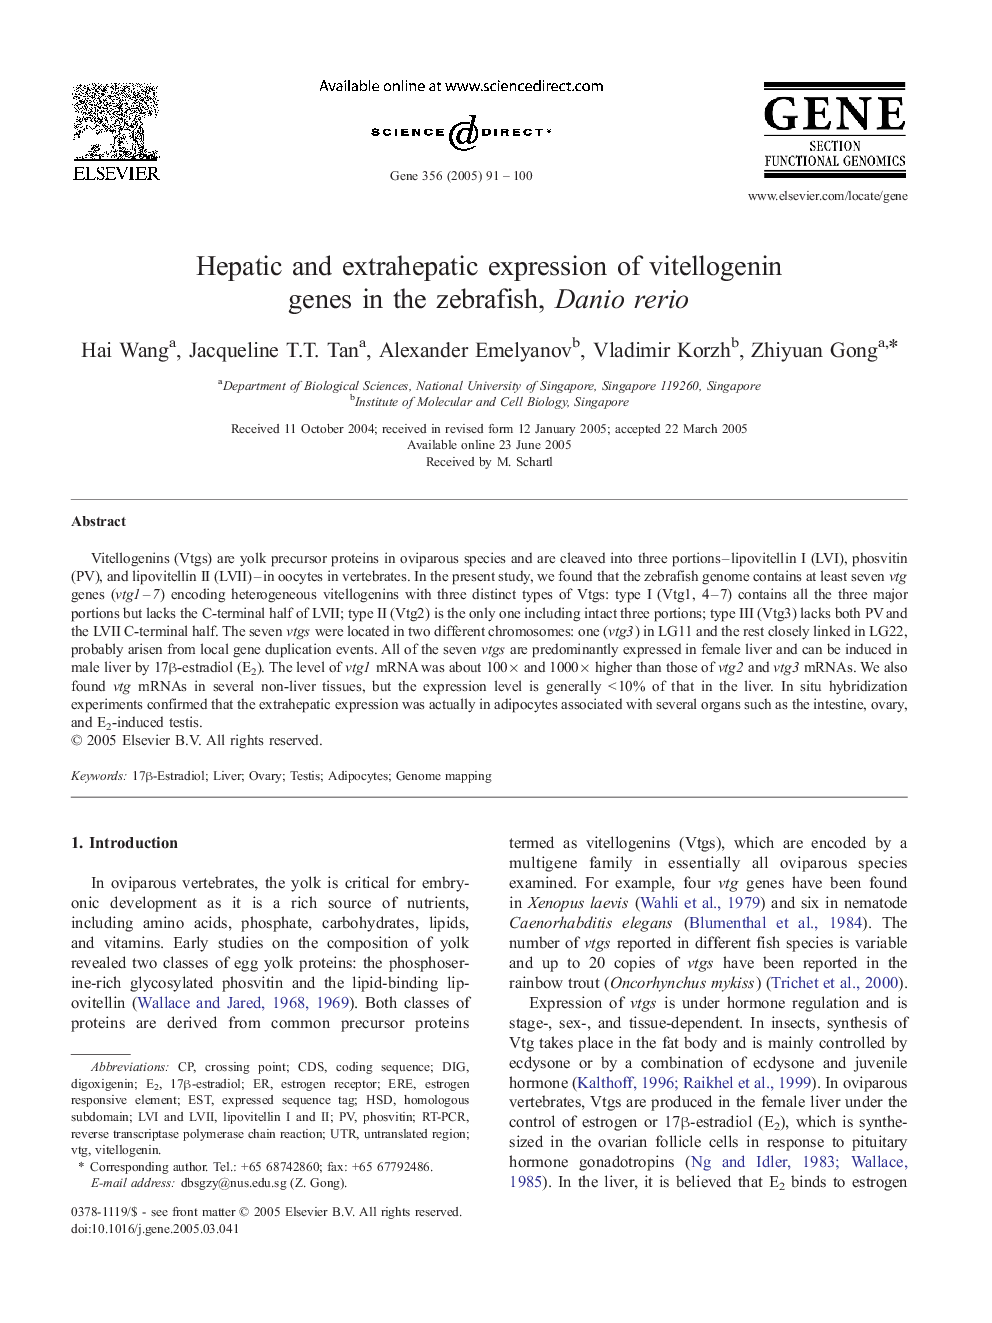 Hepatic and extrahepatic expression of vitellogenin genes in the zebrafish, Danio rerio